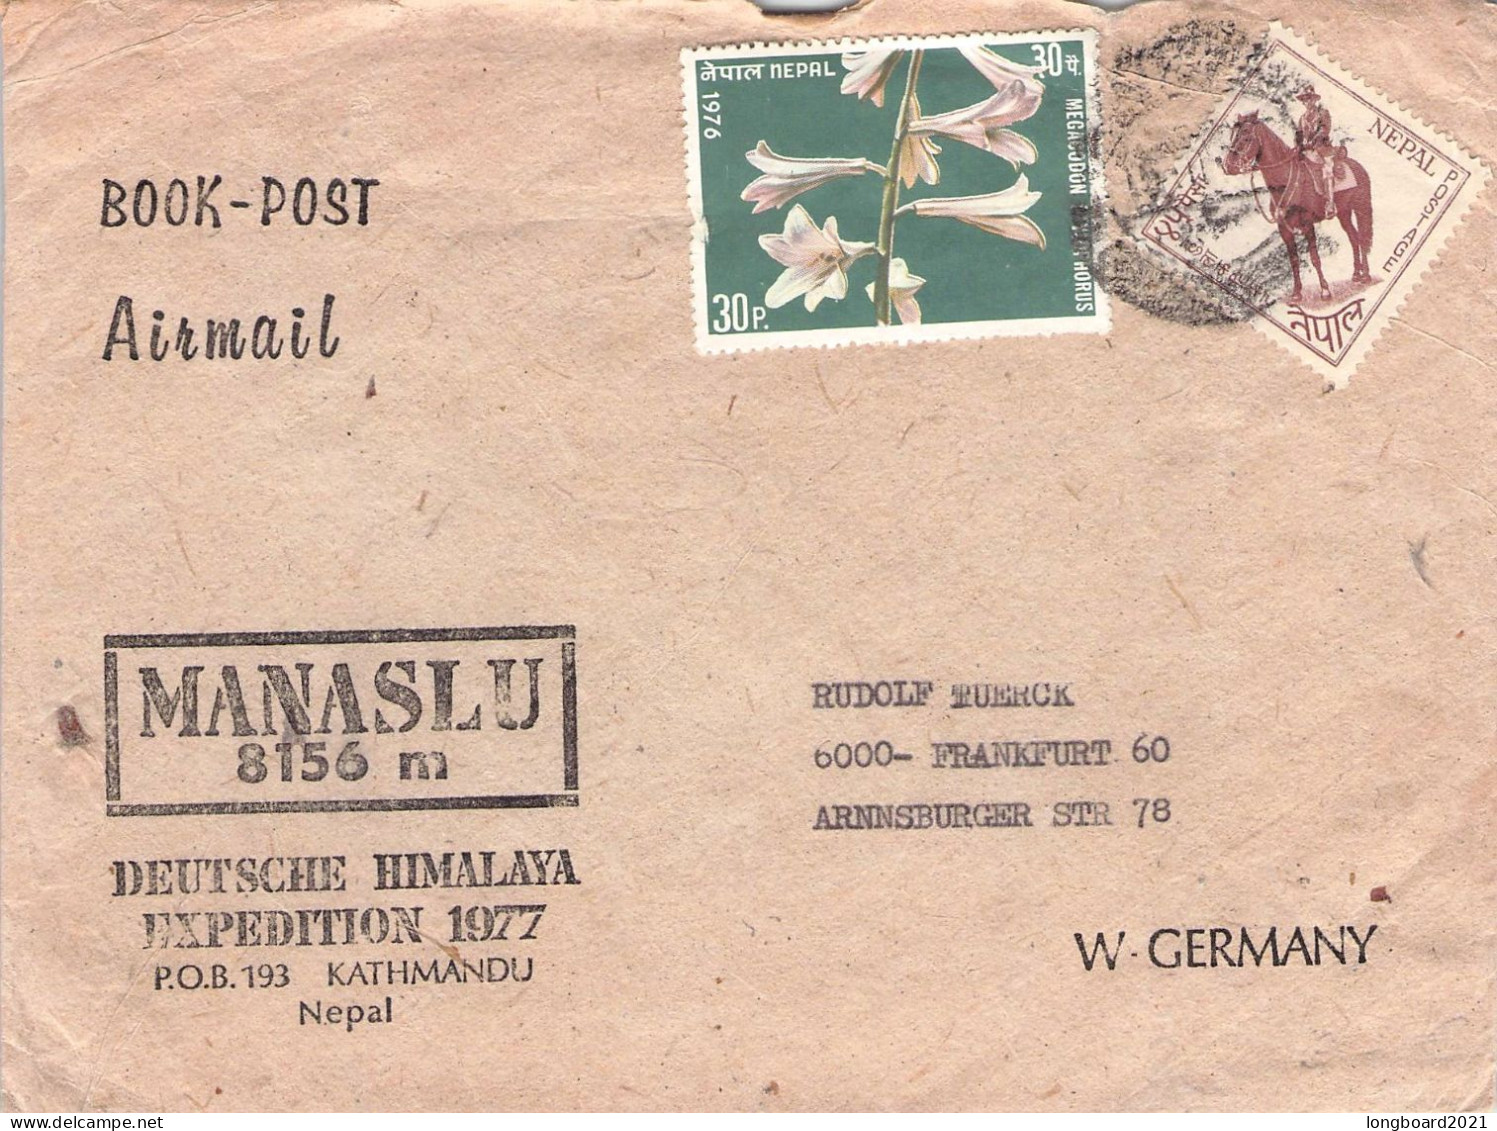 NEPAL - BOOK-POST AIRMAIL - W. GERMANY / 7039 - Népal